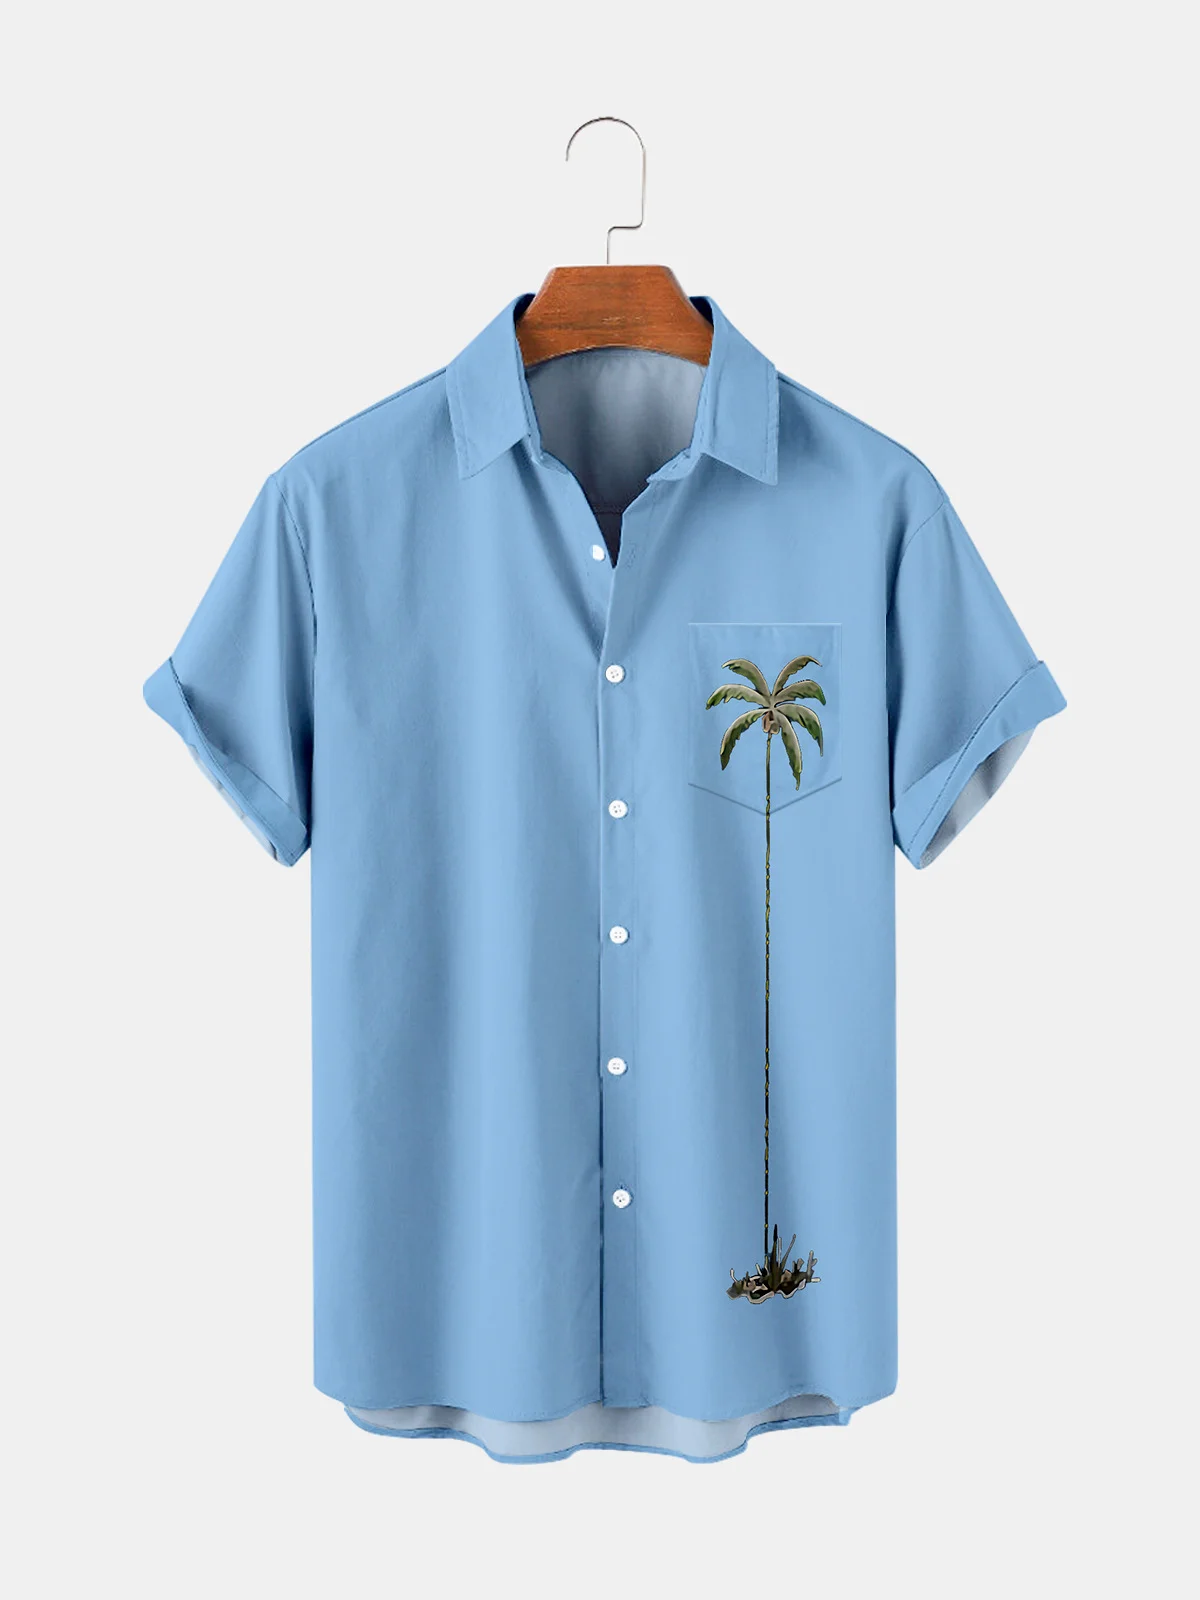 Royaura Men's Casual Coconut Tree Print Hawaiian Shirt Vacation Short ...